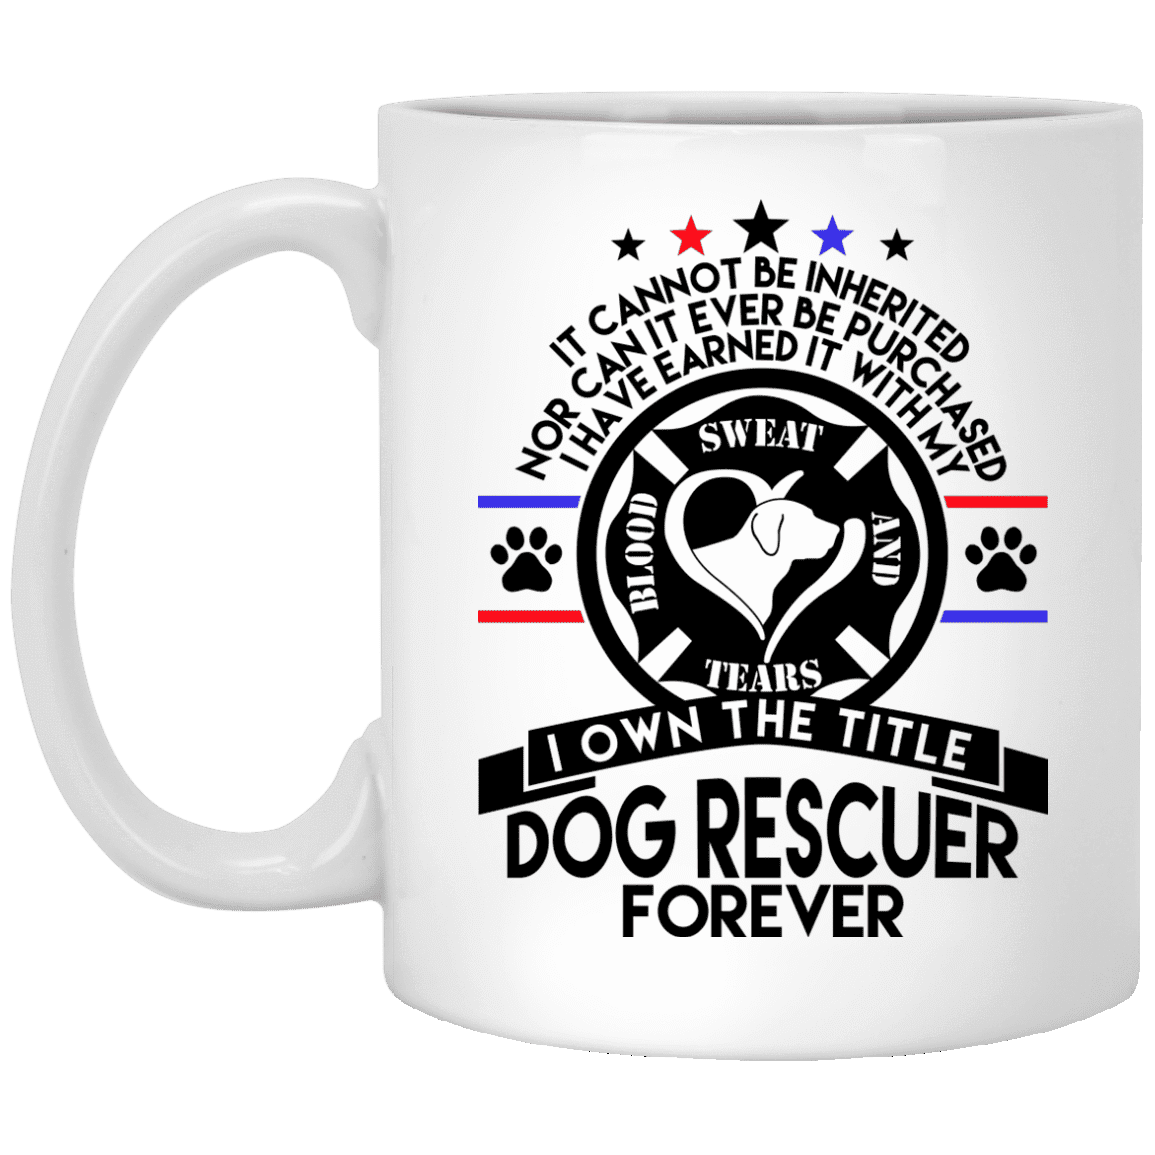 Dog Rescuer Forever - Mugs.